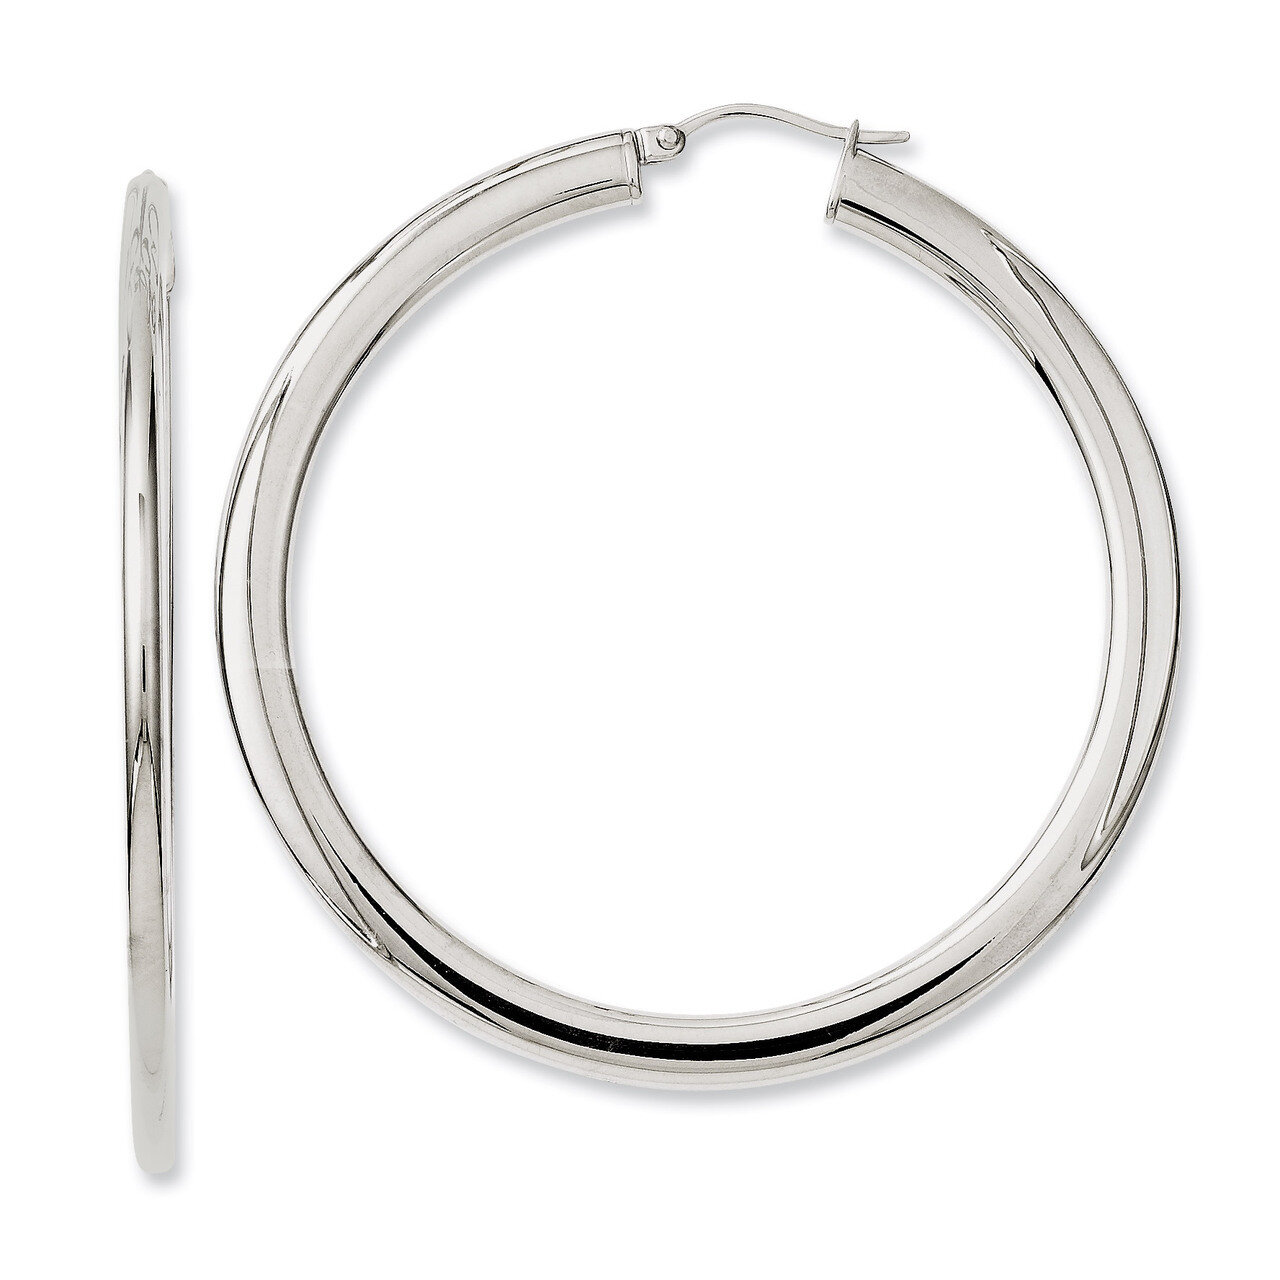 Polished Hollow Hoop Earrings - Stainless Steel SRE657